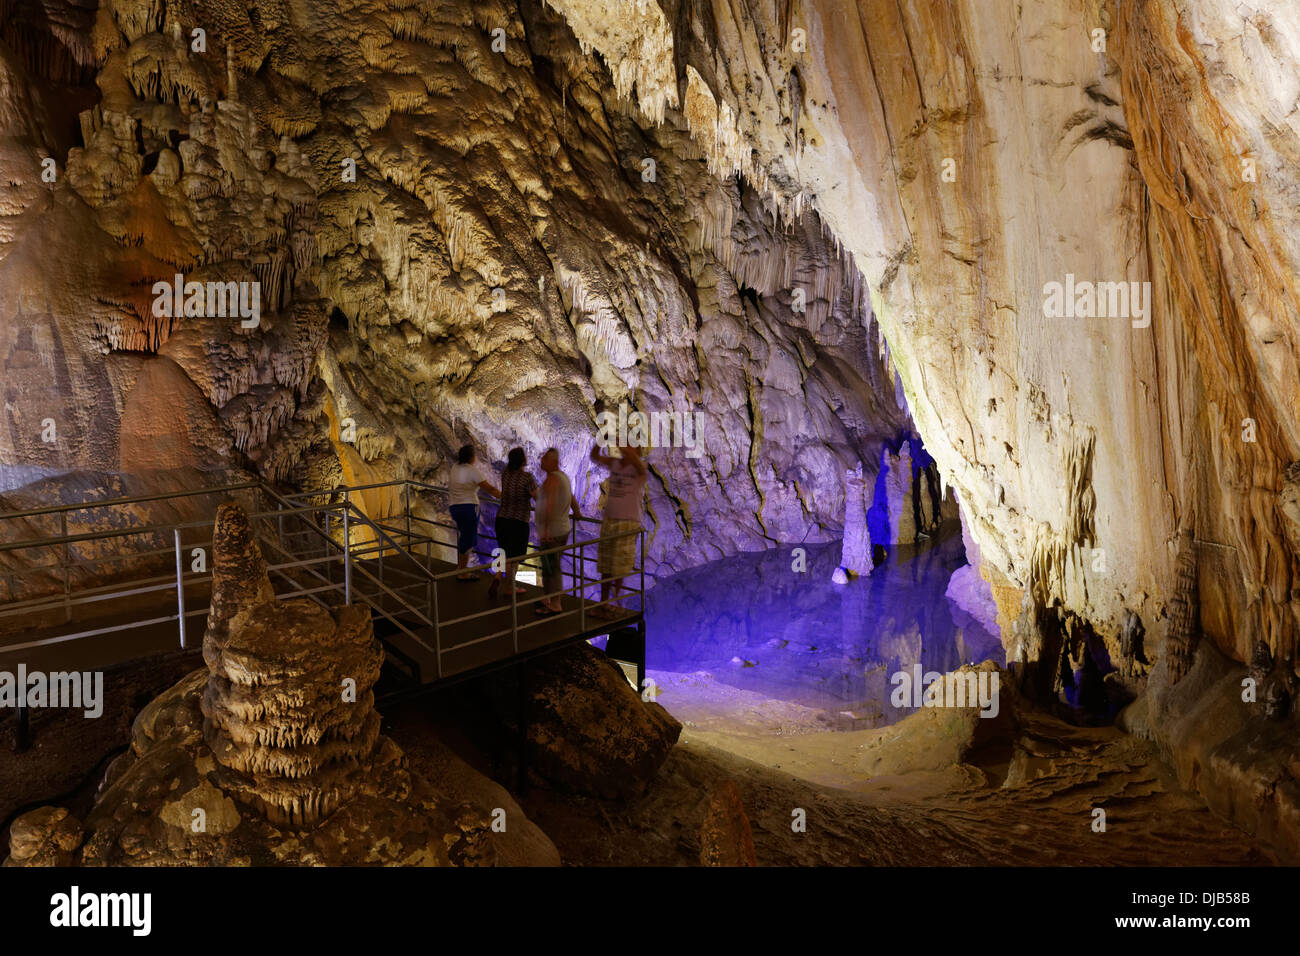 Dim Mağarası stalactite cave, Dimcay Valley, Alanya, Antalya Province, Mediterranean, Turkey Stock Photo